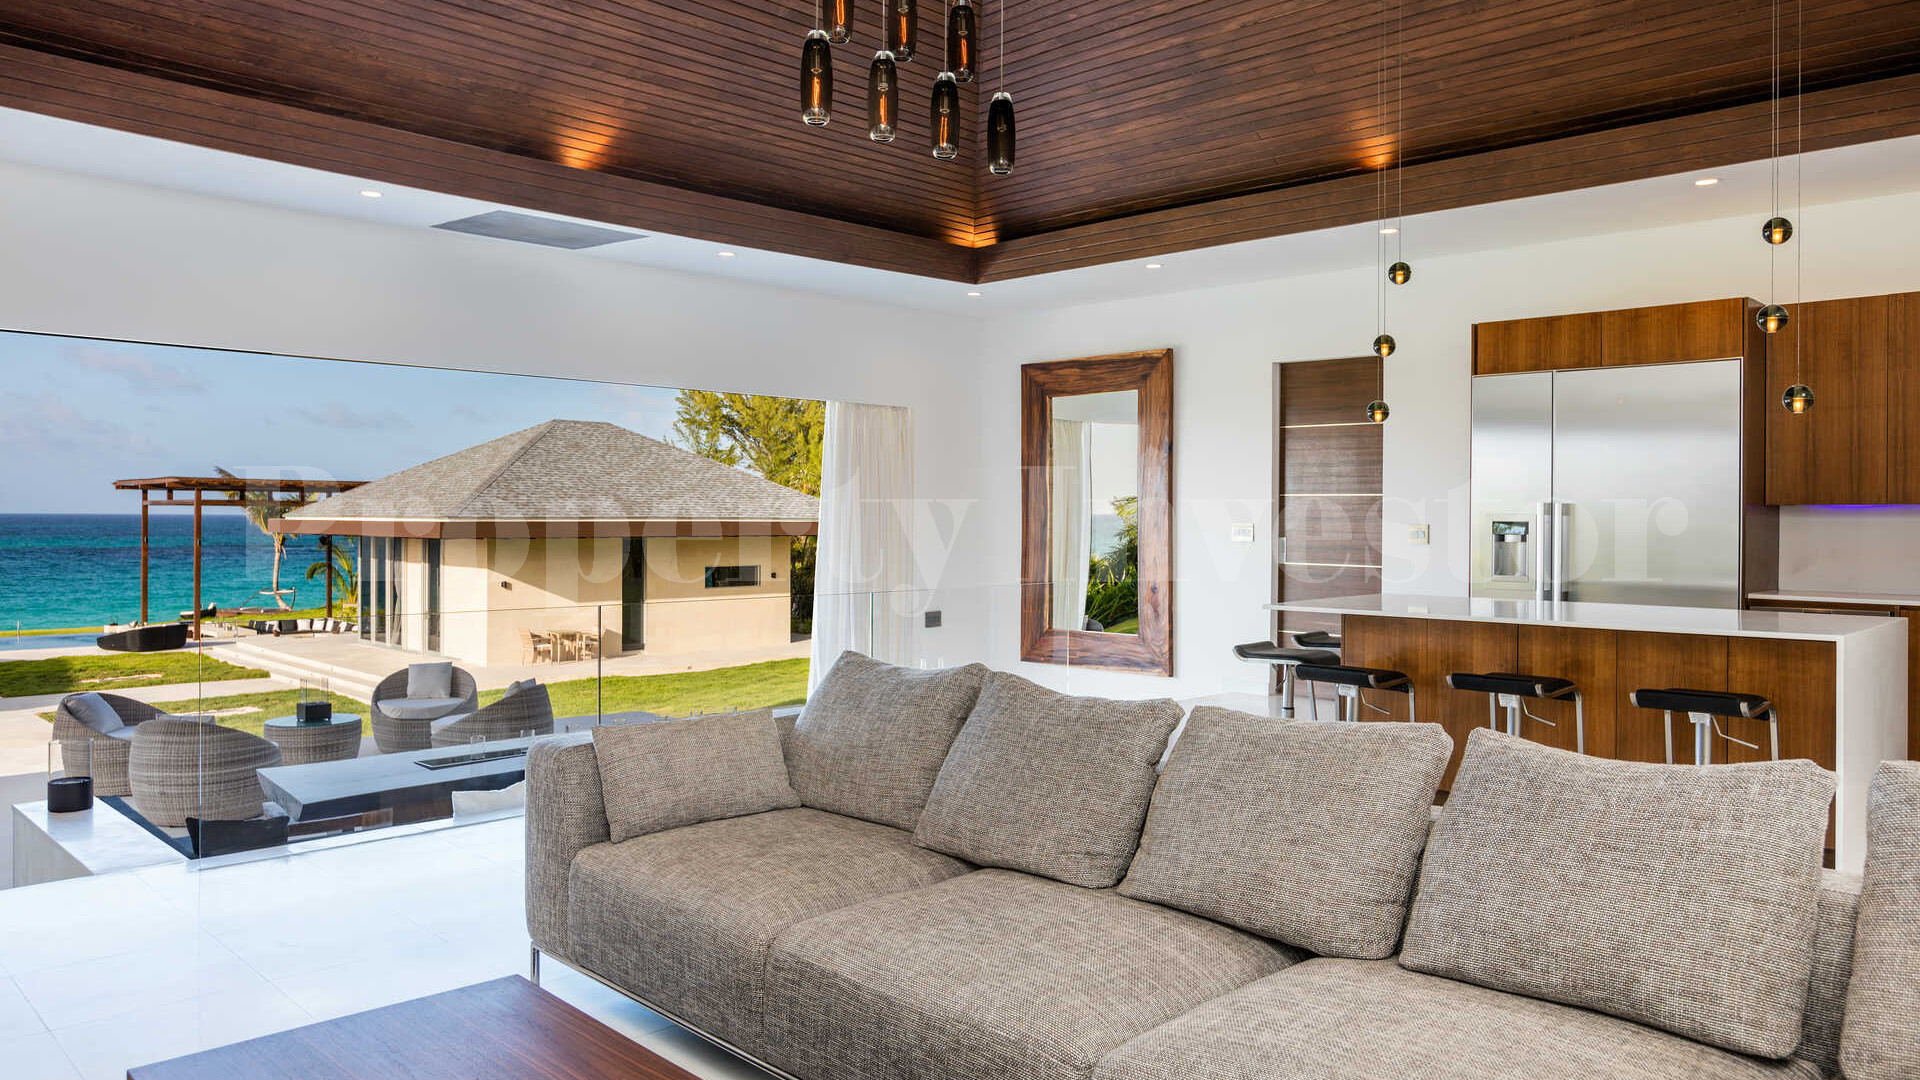 Divine 4 Bedroom Luxury Beachfront Villa for Sale in Eleuthera, the Bahamas